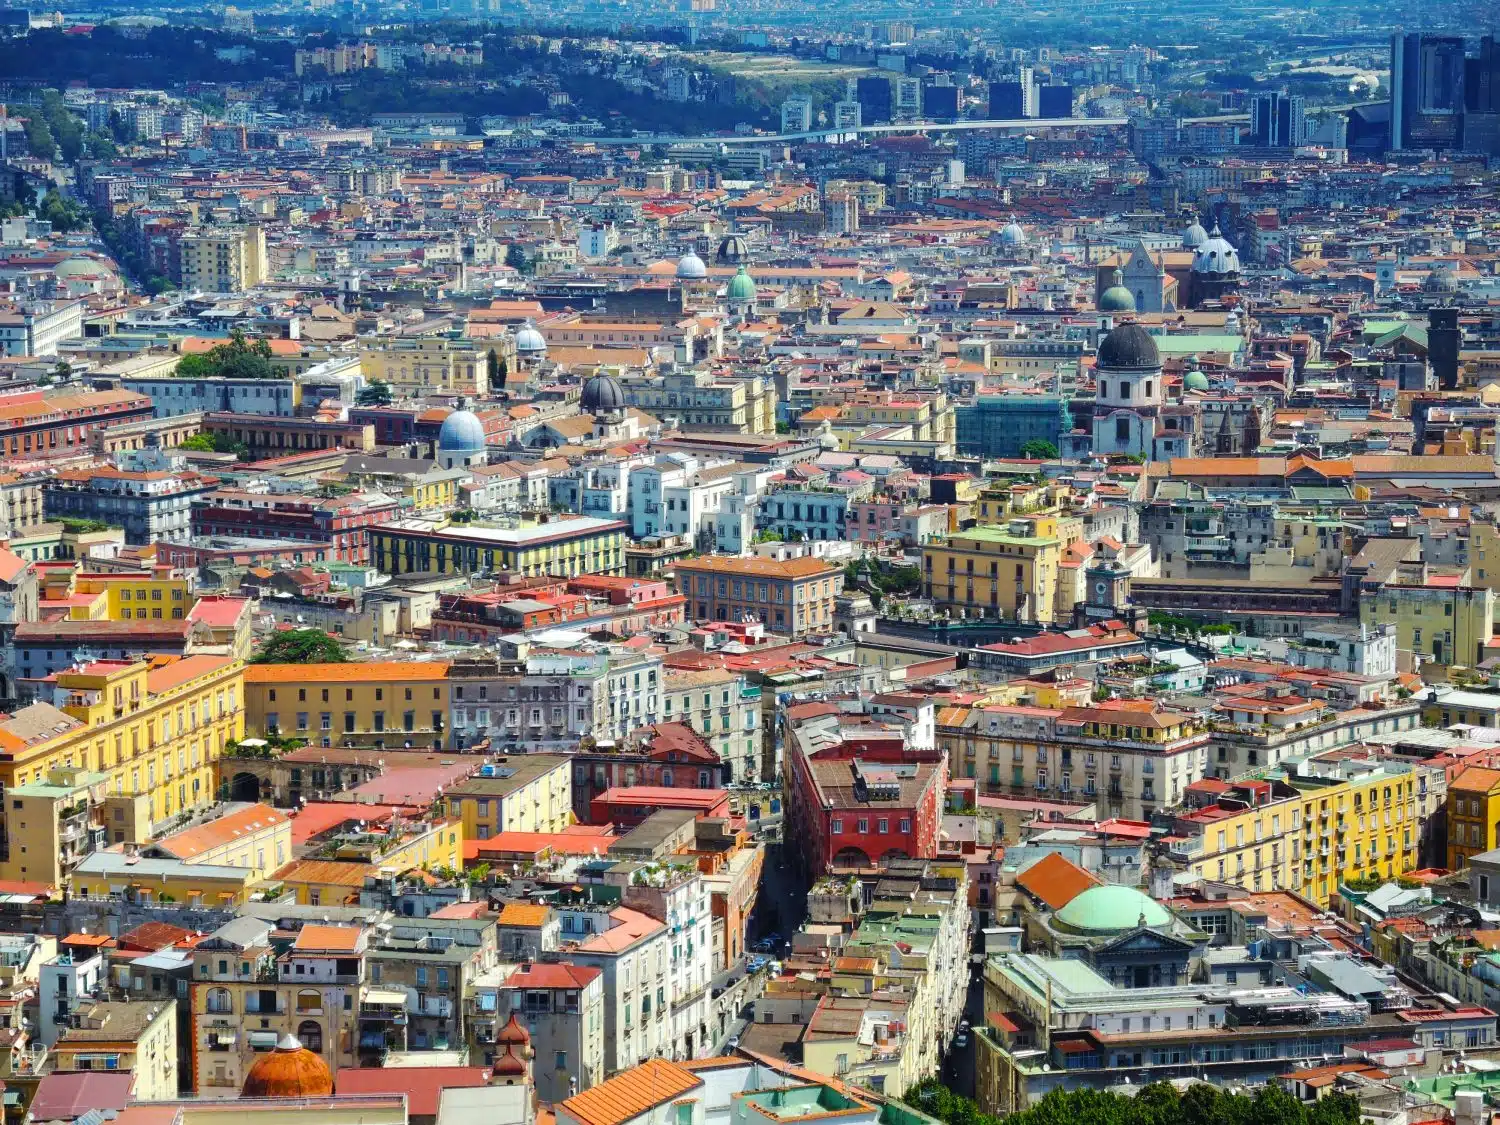 Neapel - einer der berühmtesten Orte Italiens - hier